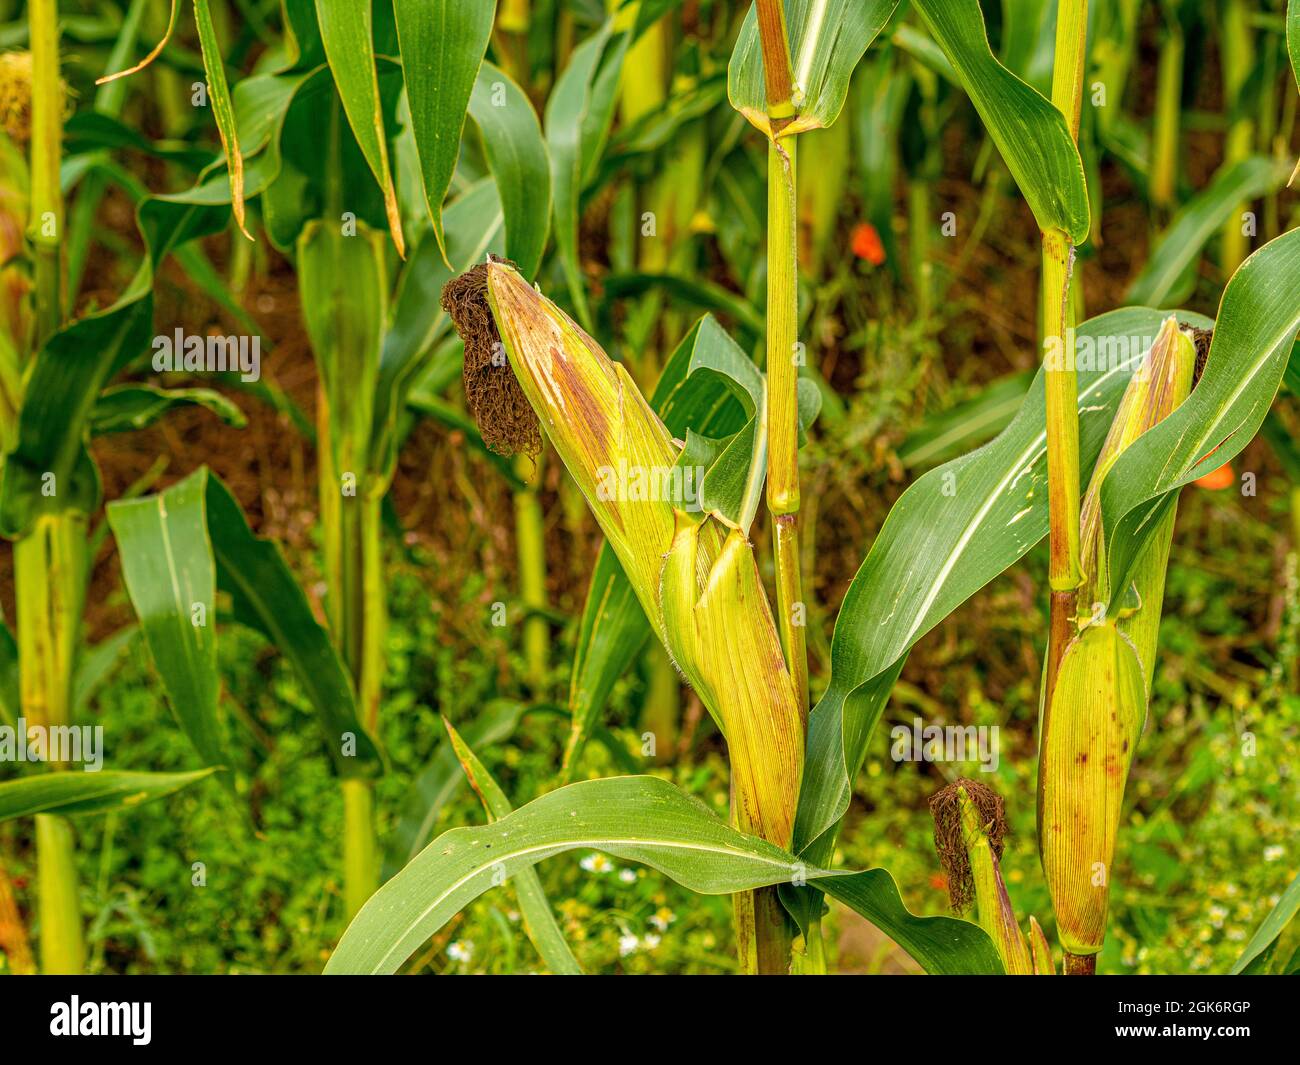 Corn growing in field Stock Photo